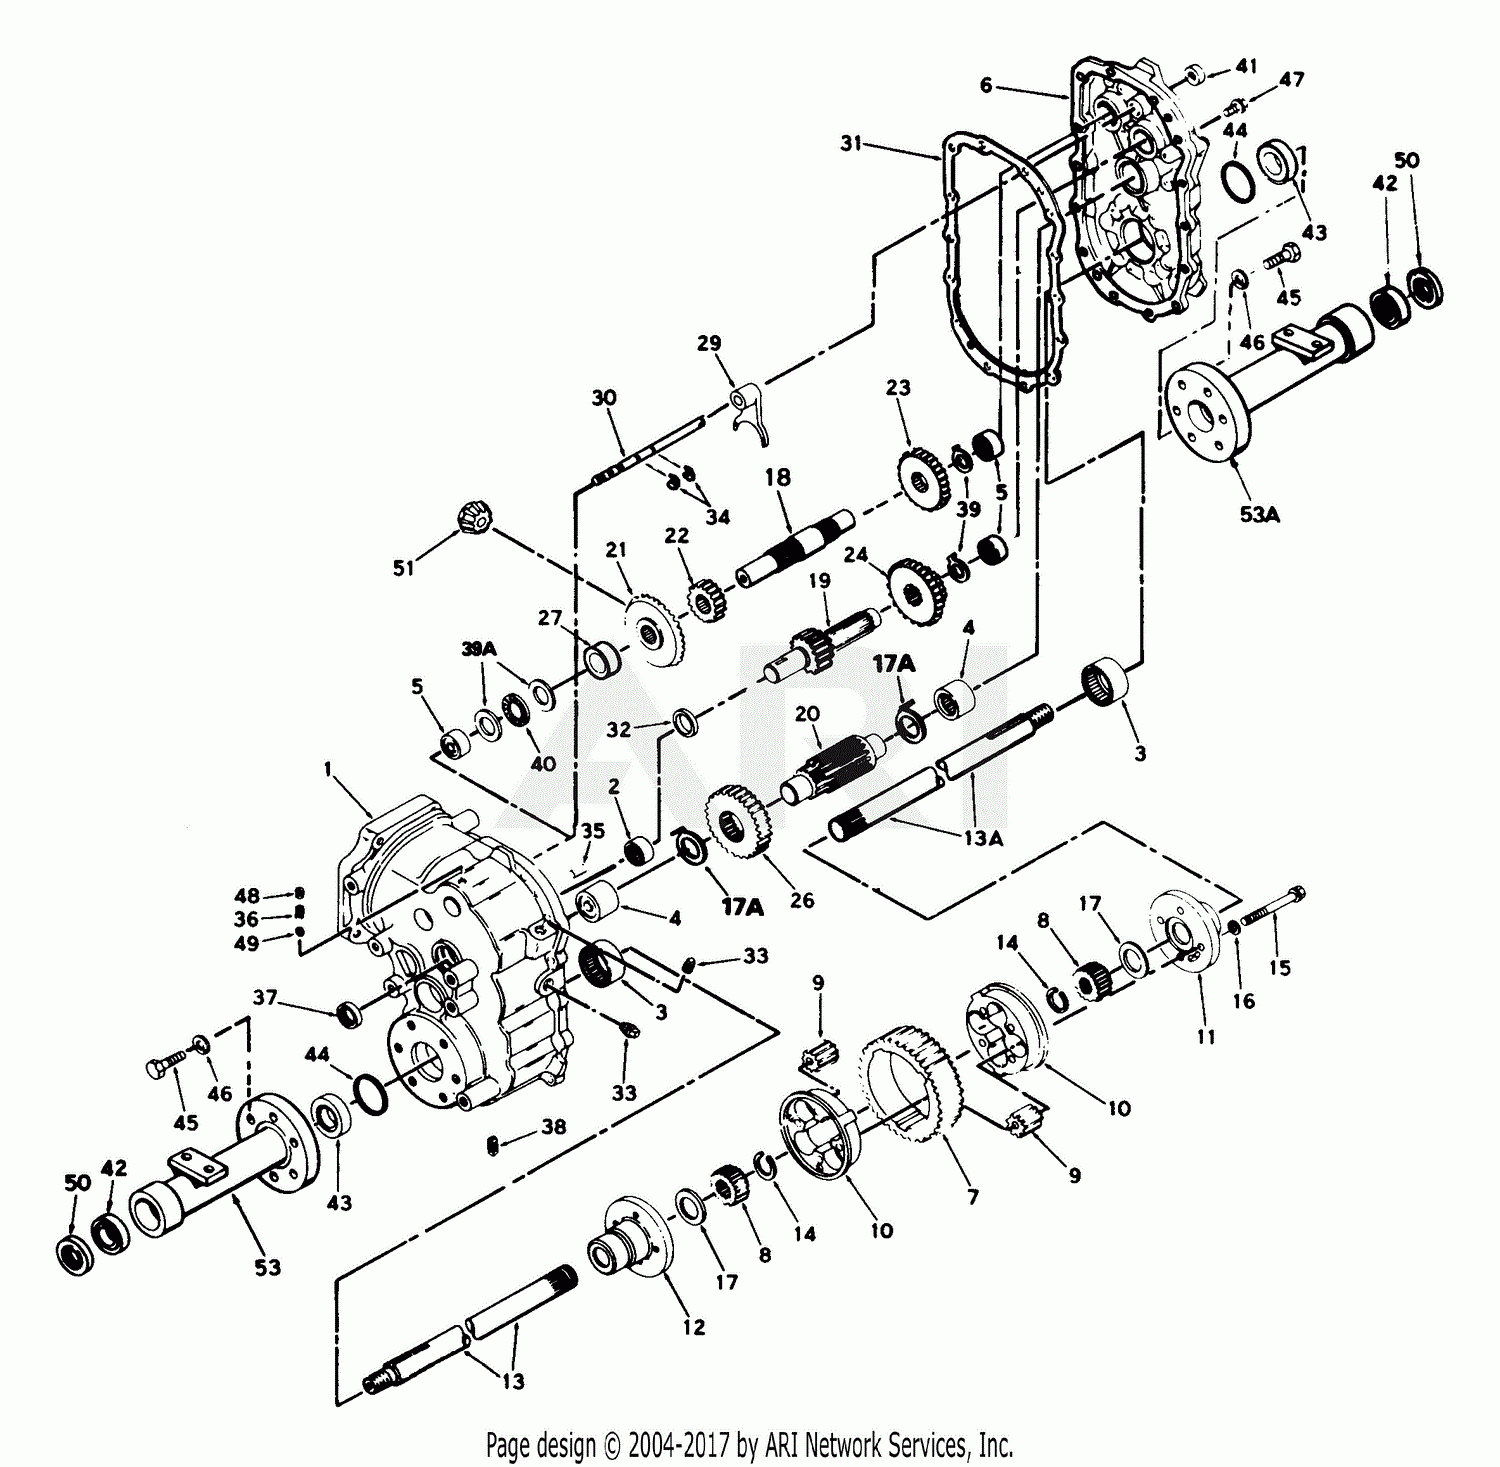 Diagram] Case Tractor Pump Diagram Full Version Hd Quality